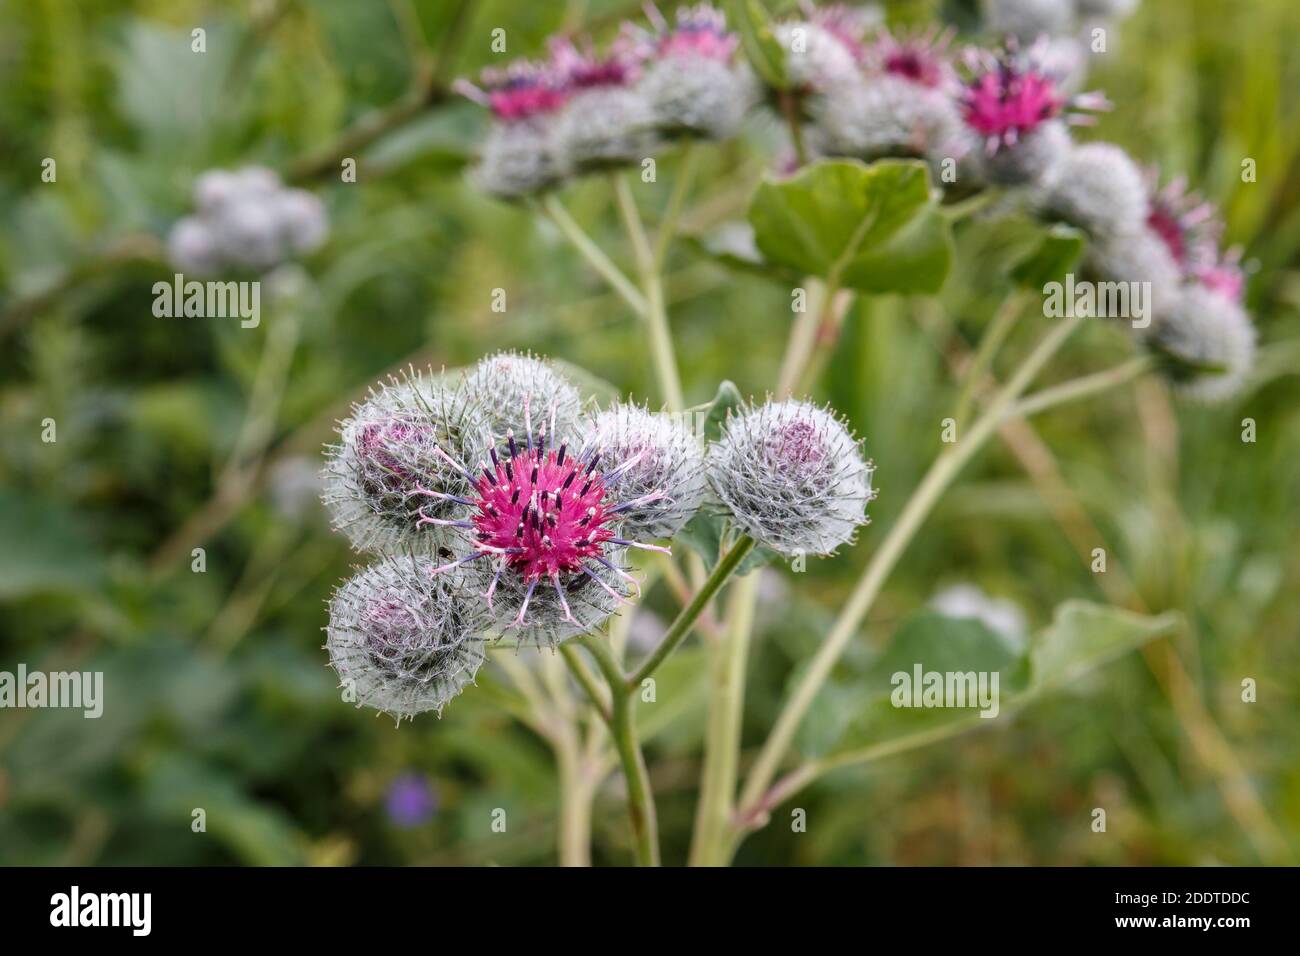 Arctium lappa, greater burdock. Blooming medicinal plant burdock. Burdock flower. Stock Photo